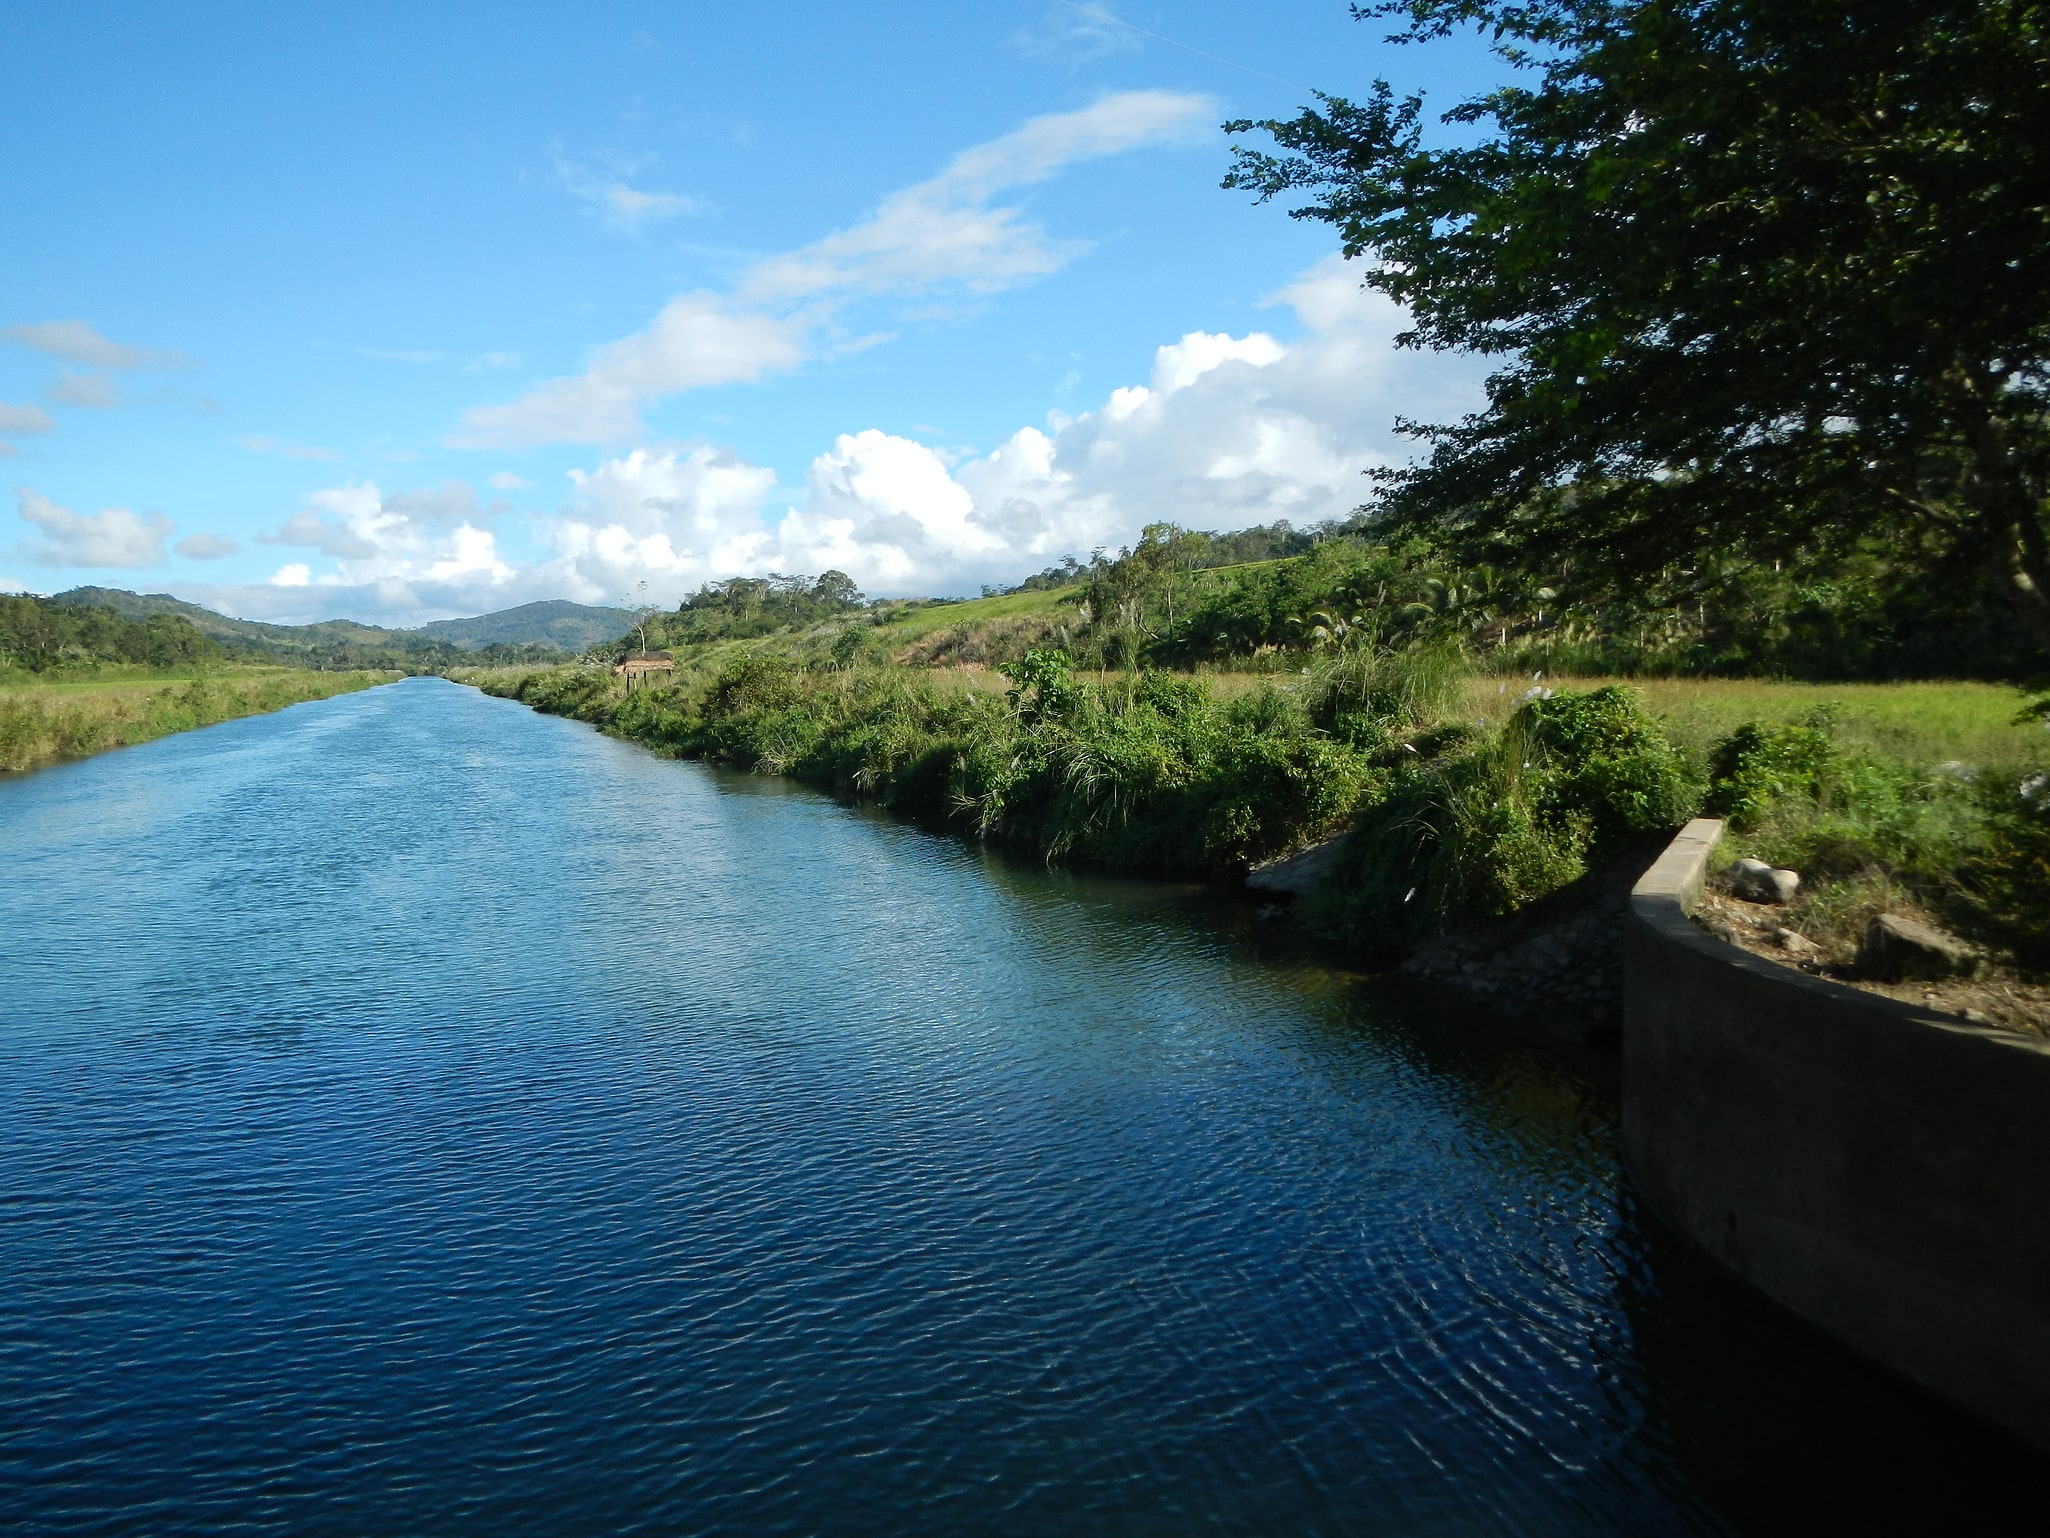 Casecnan Protected Landscape, Filipinas